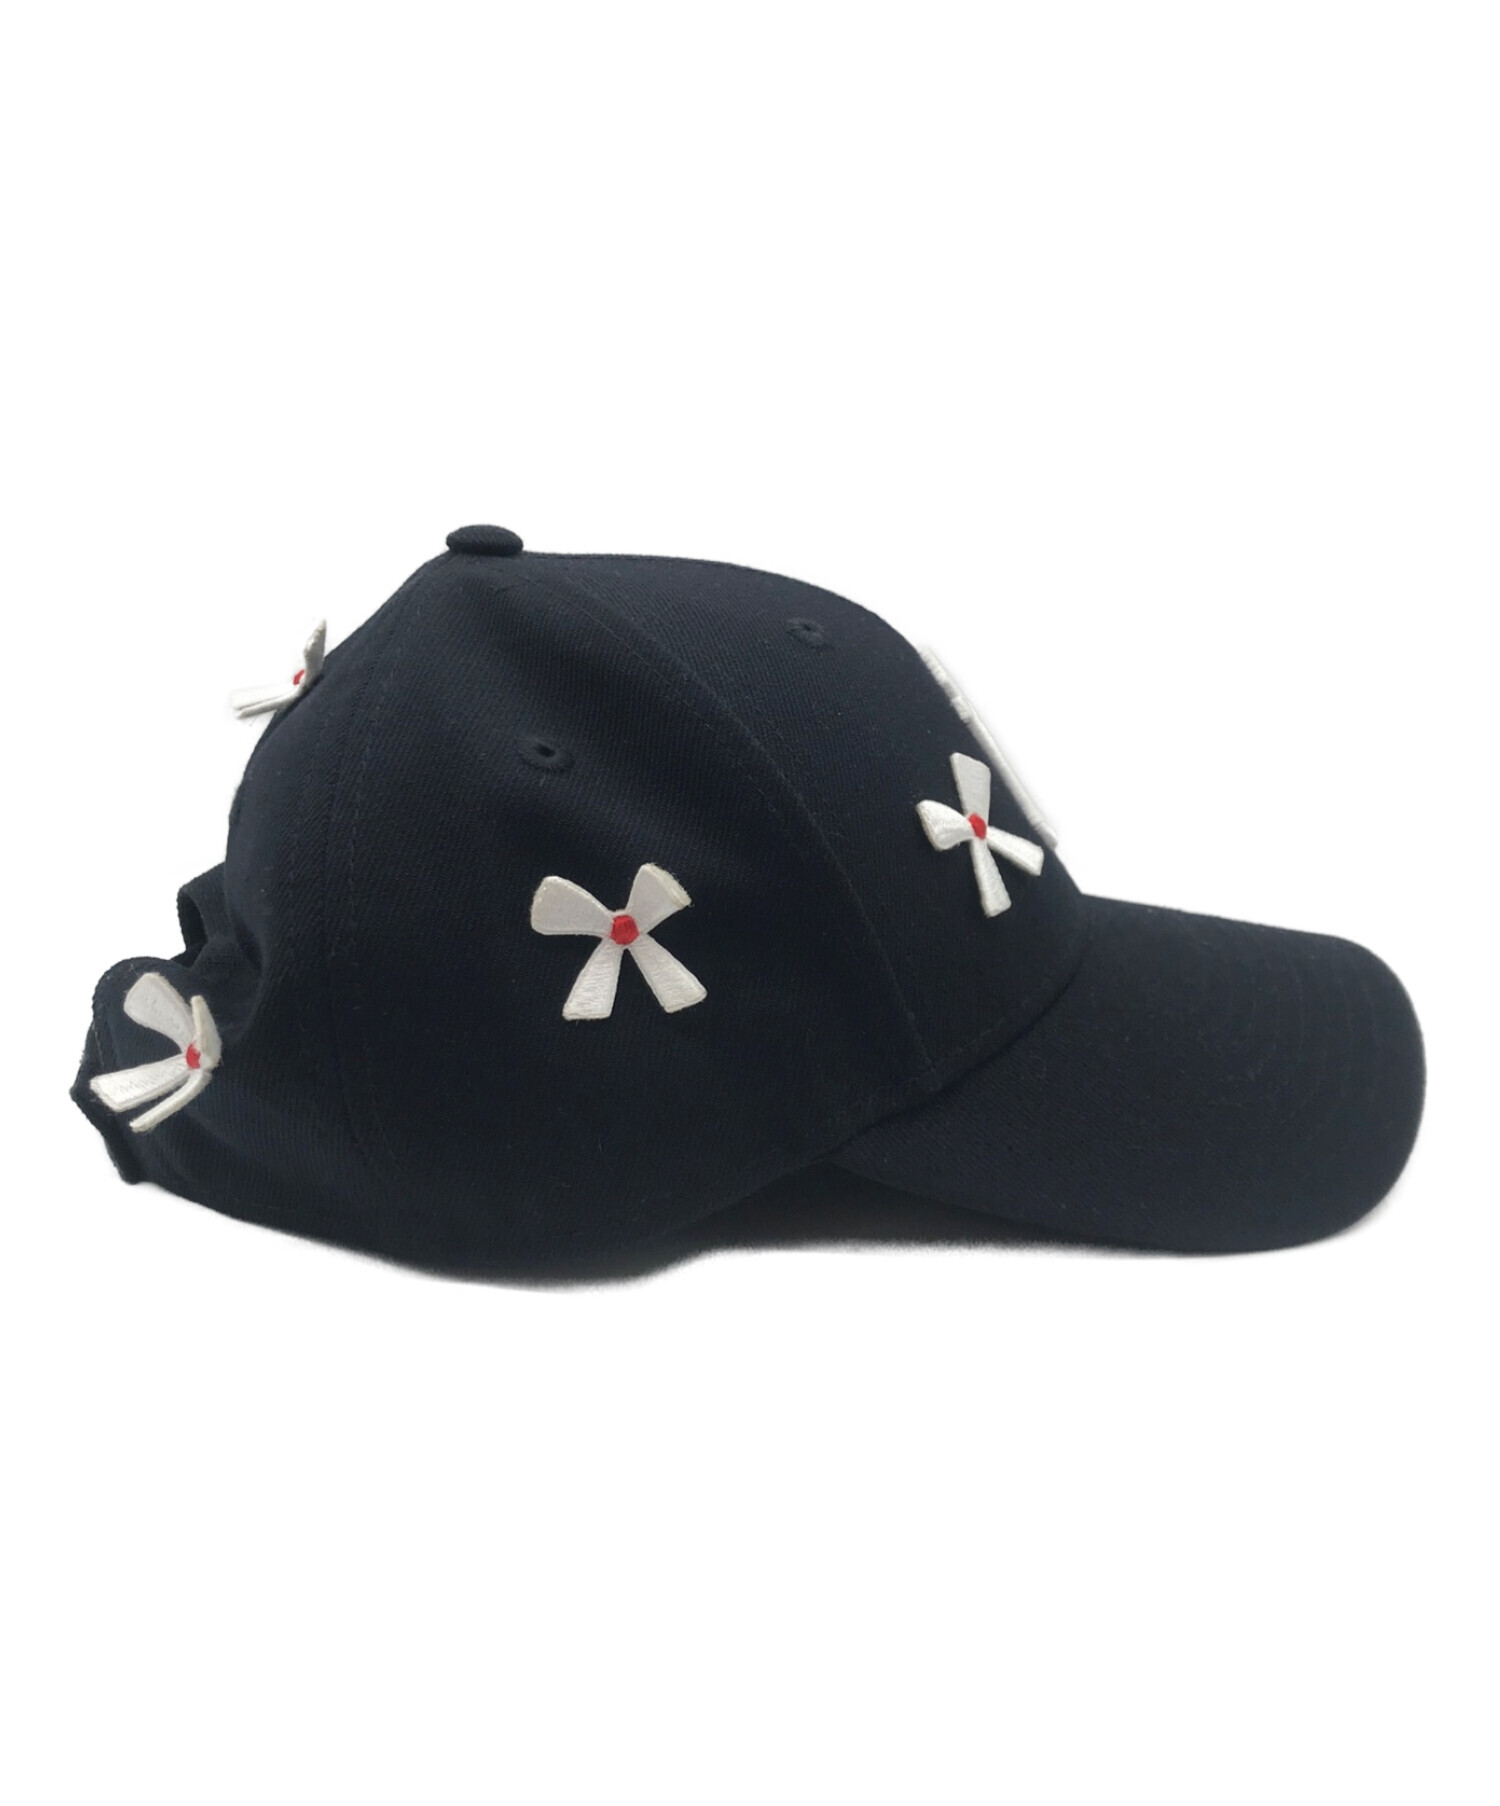 人気お得nickgear ribbon cap BLACK (Rainbow) 帽子